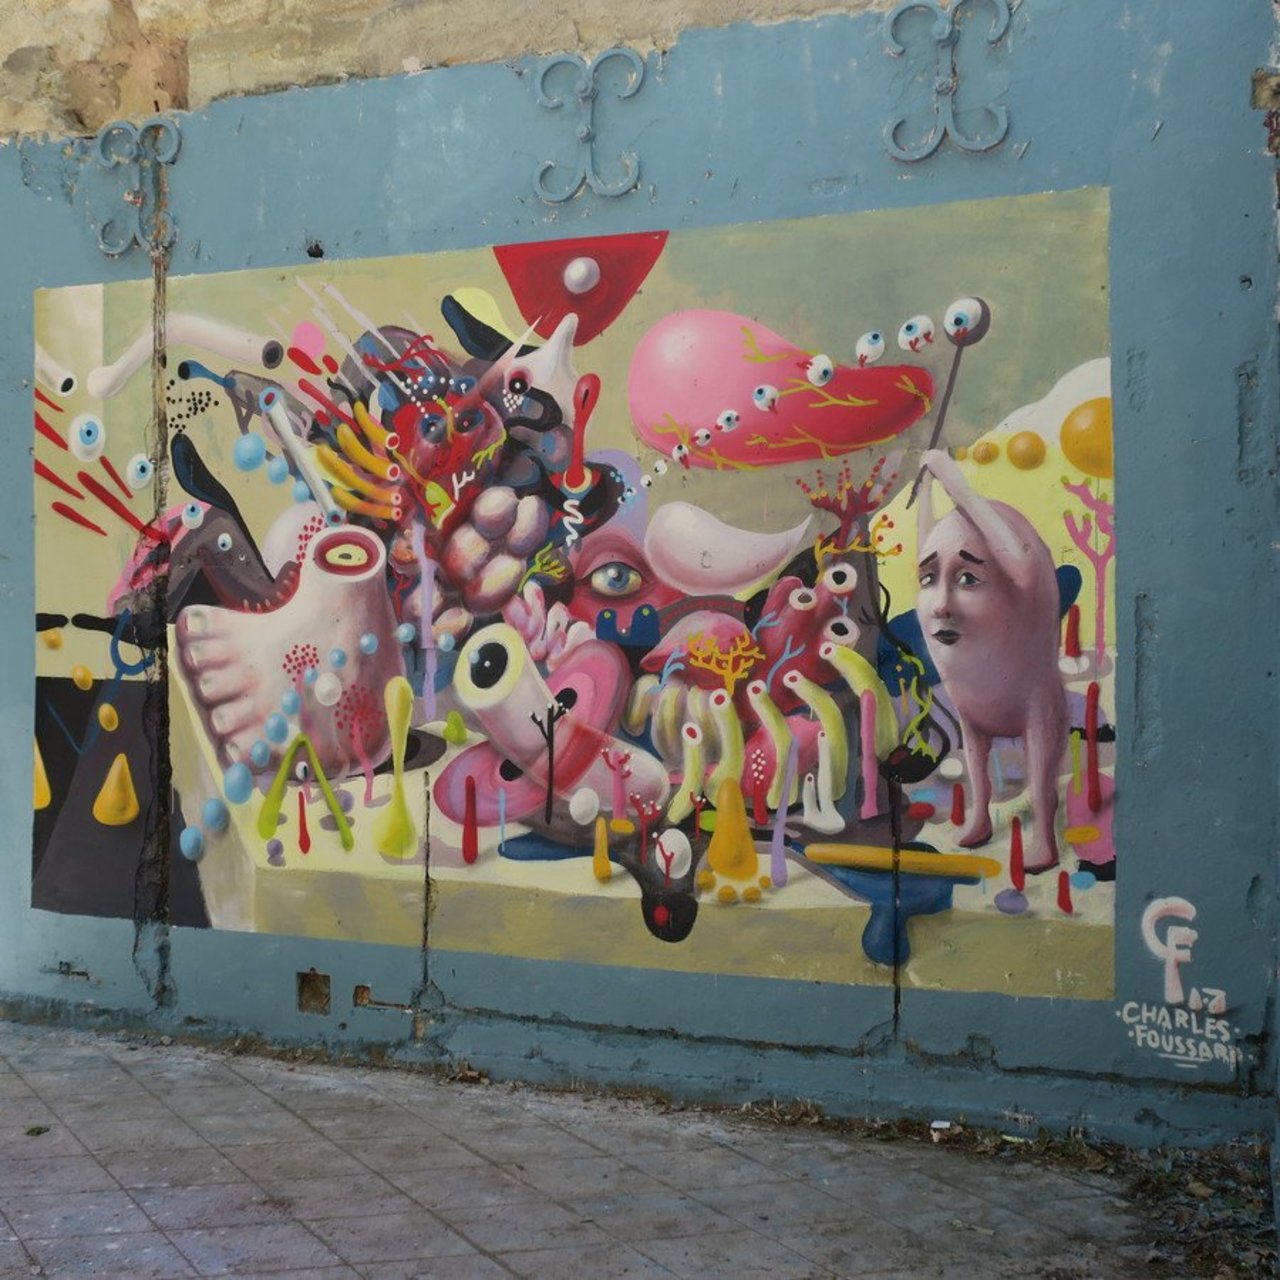 A wacky, anatomically-themed mural painted in #Bordeaux, #France by #CharlesFoussard (http://globalstreetart.com/charles-foussard). -- #globalstreetart #streetart #art #graffiti https://t.co/BGqjeWWRfu